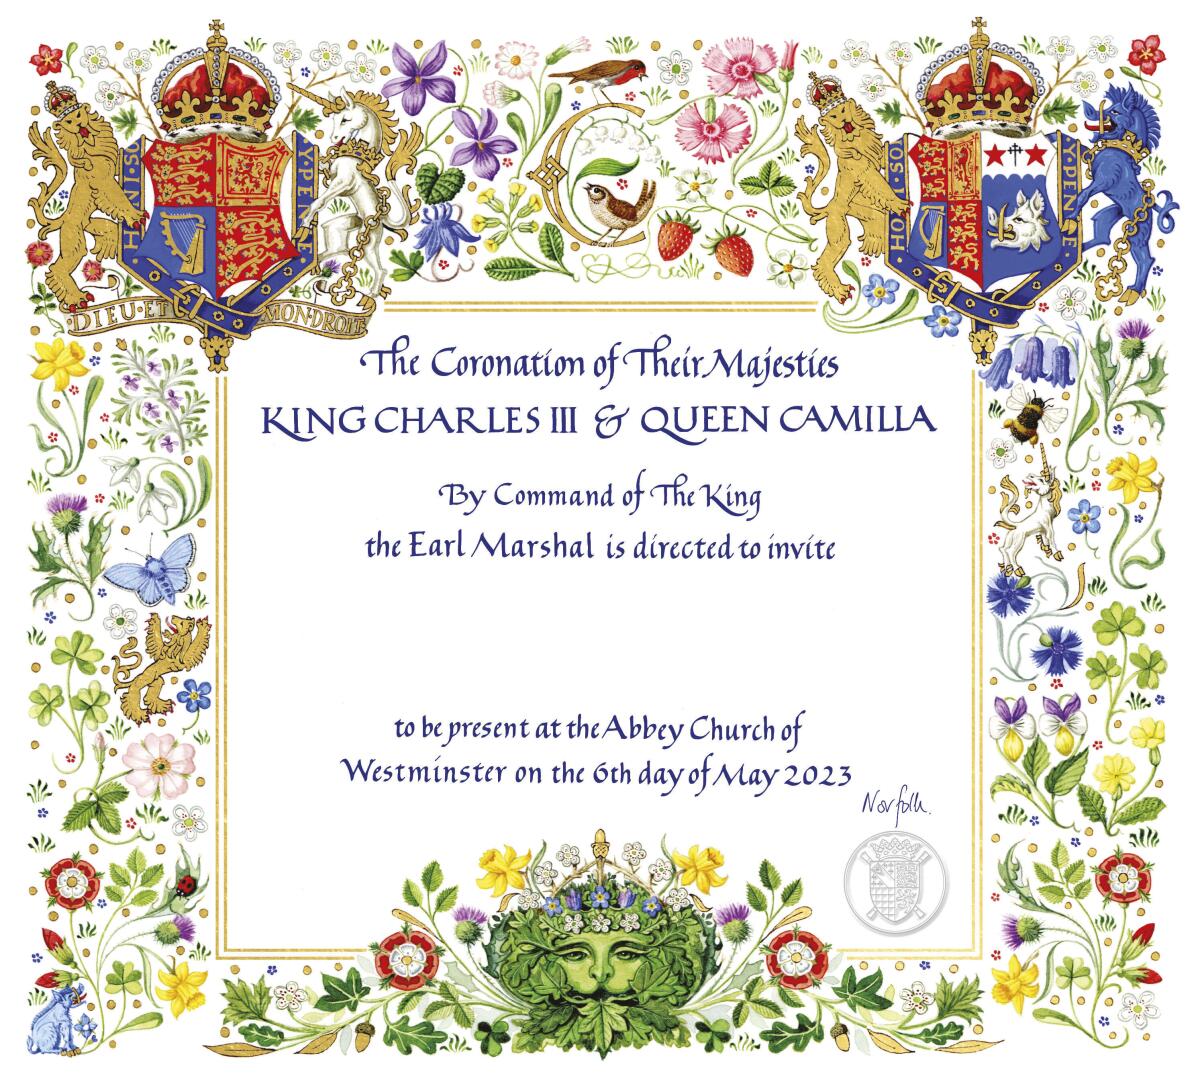 Flowery invitation to King Charles III's coronation